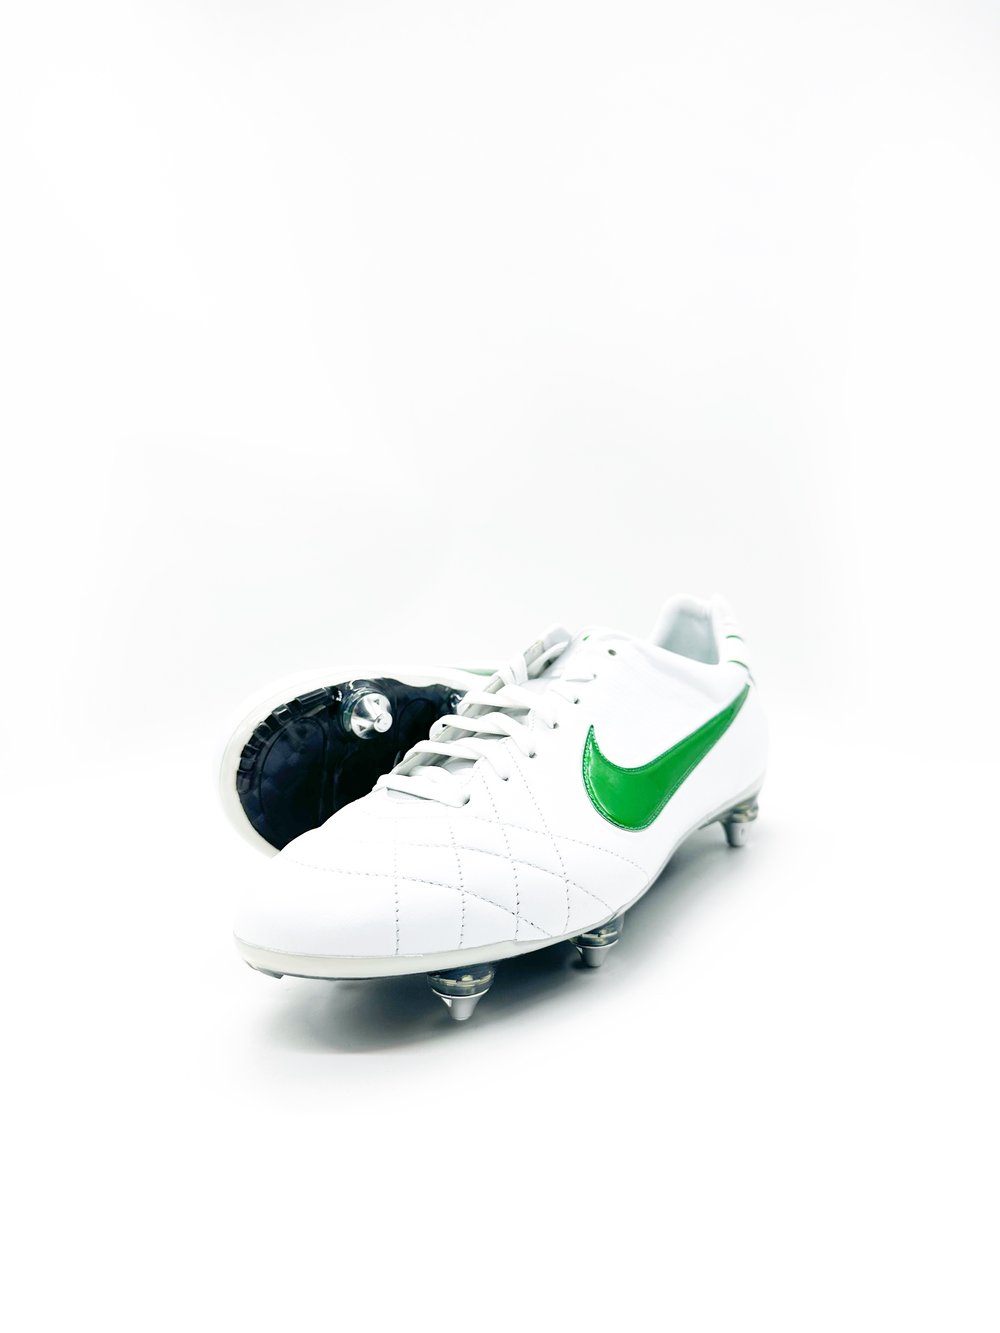 Tbtclassicfootballboots — Nike Tiempo GREEN SG